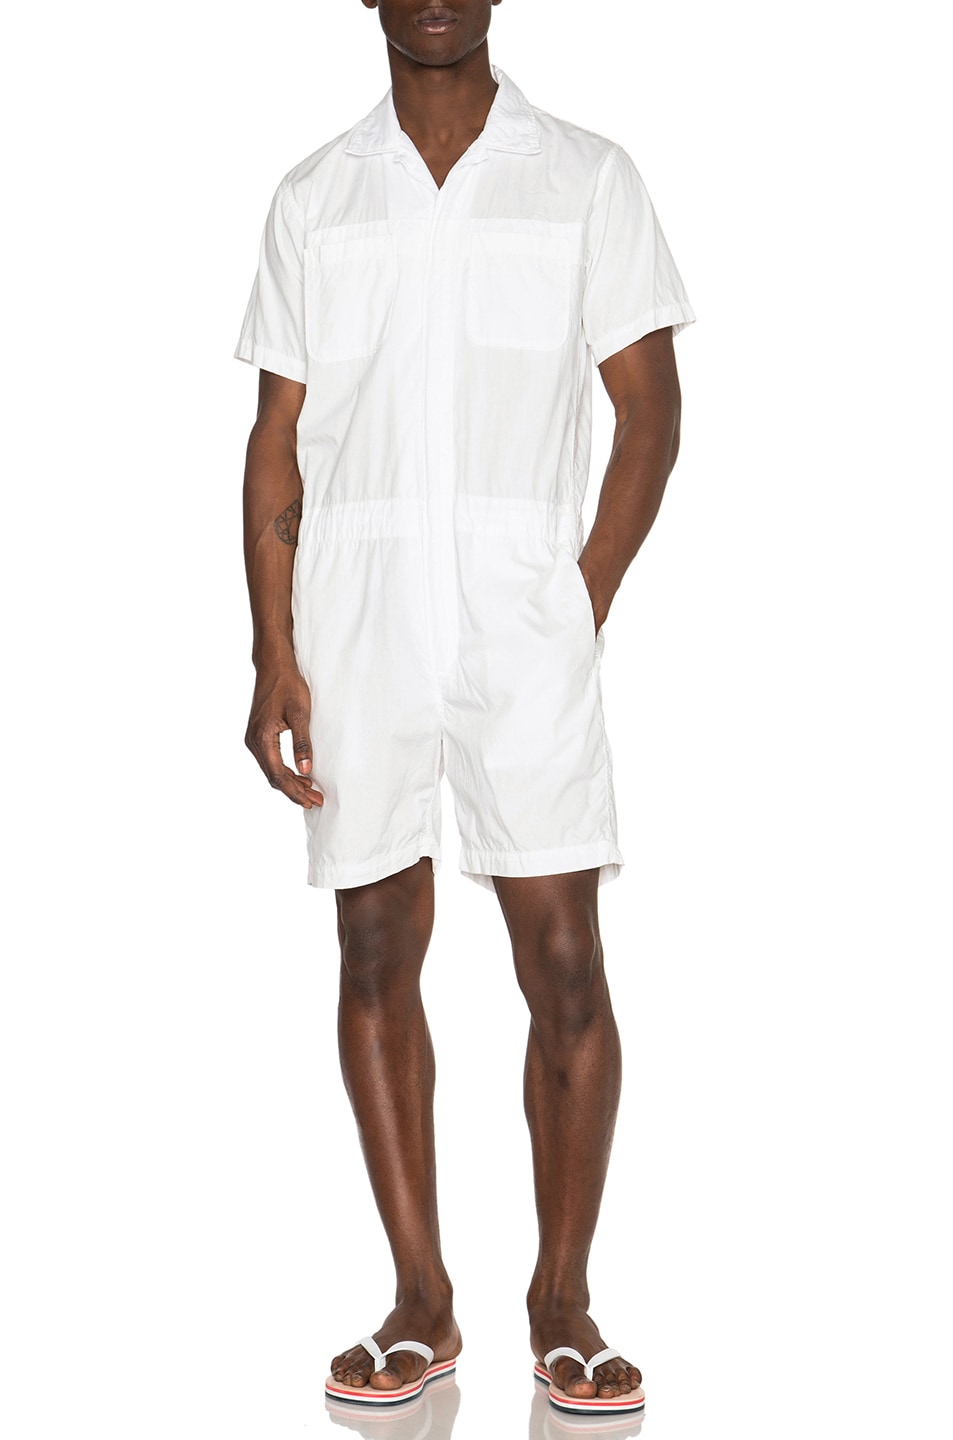 Image 1 of Engineered Garments Combi Suit in White Poplin